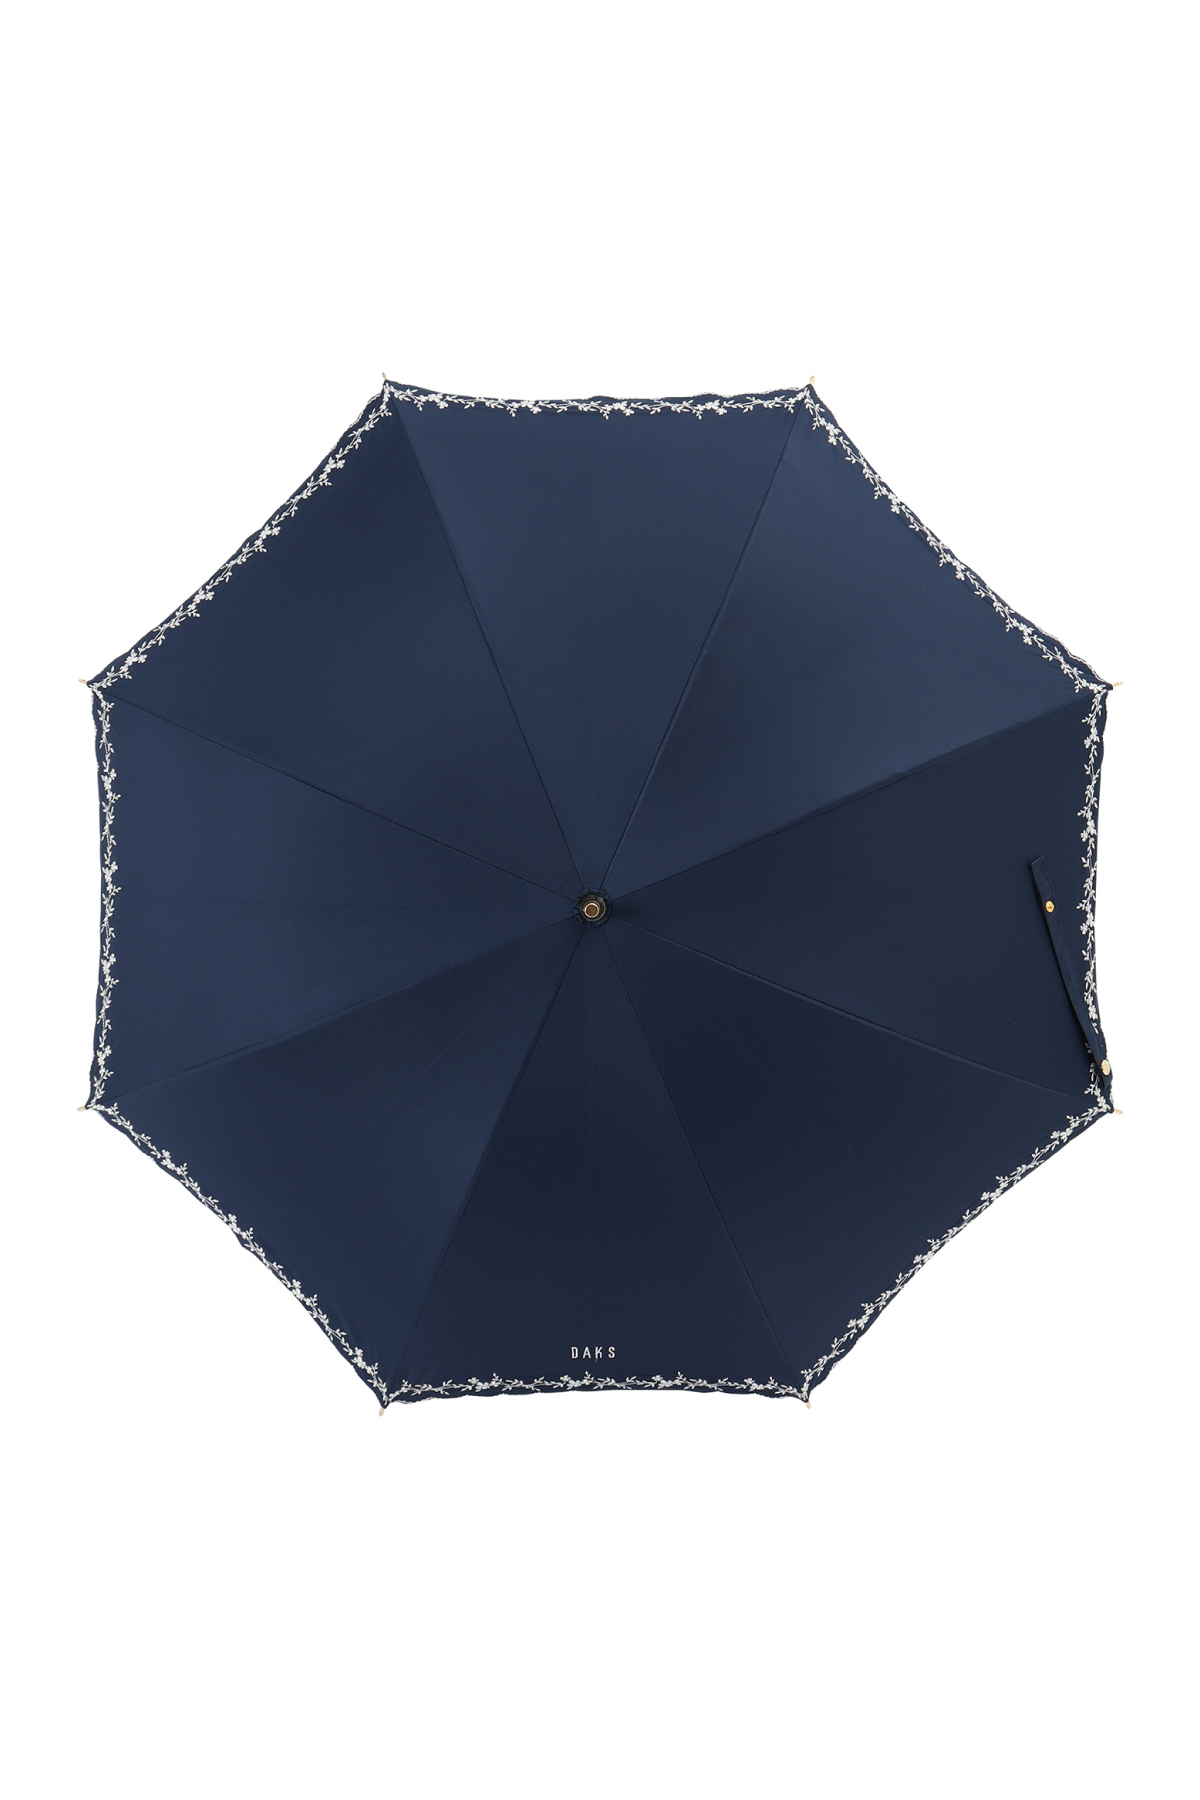 【日傘】ショート傘裾刺繍 詳細画像 8